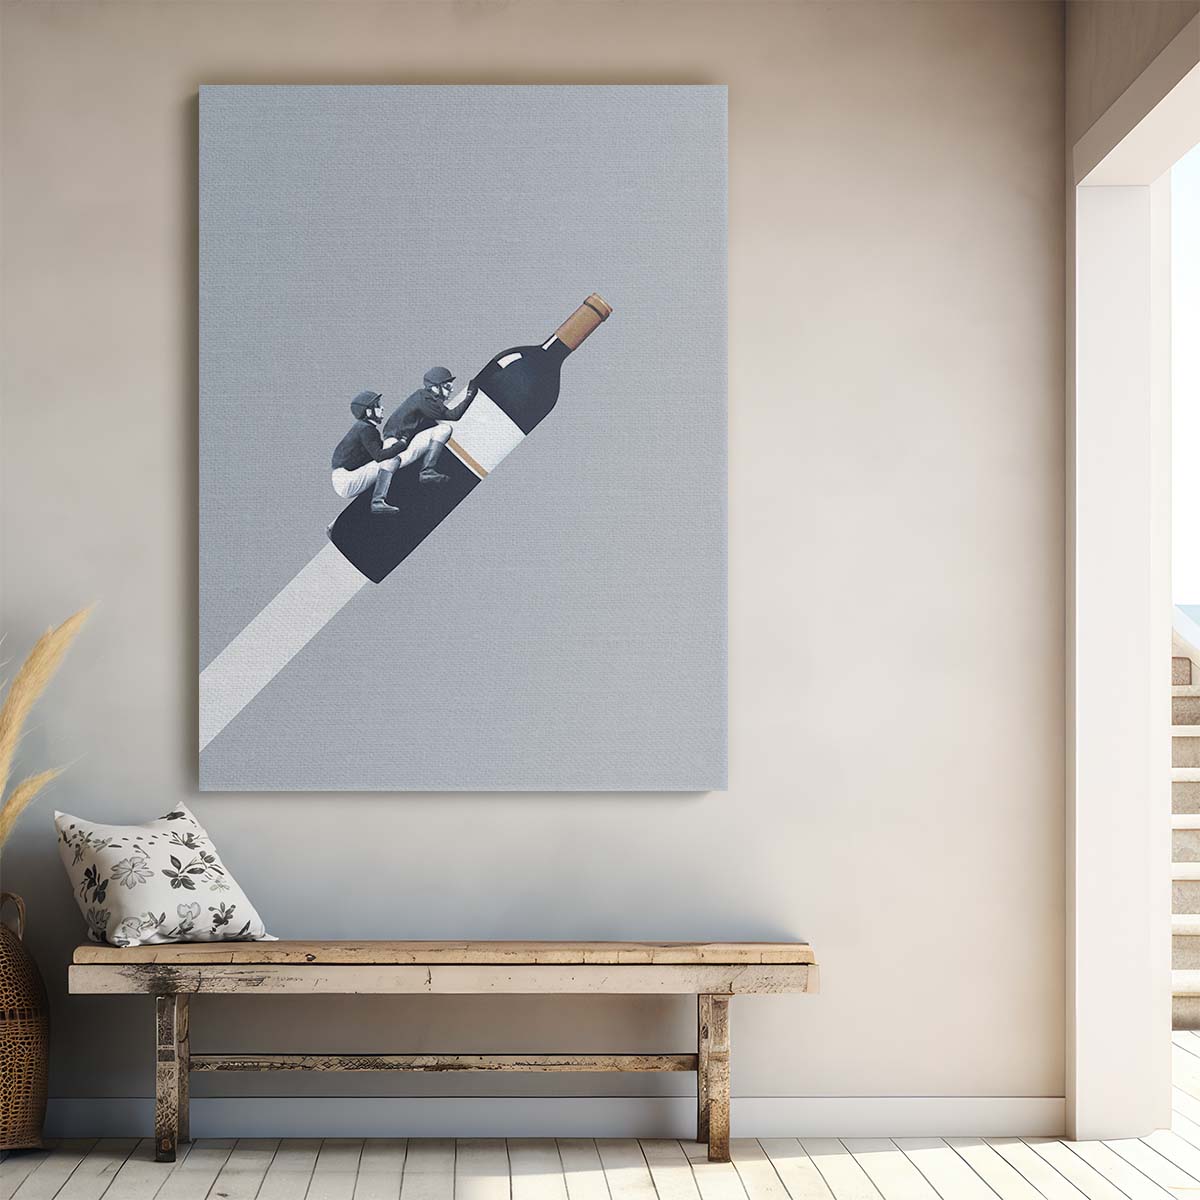 Mid-Century Wine Rocket Ride Illustration by Maarten Leon by Luxuriance Designs, made in USA